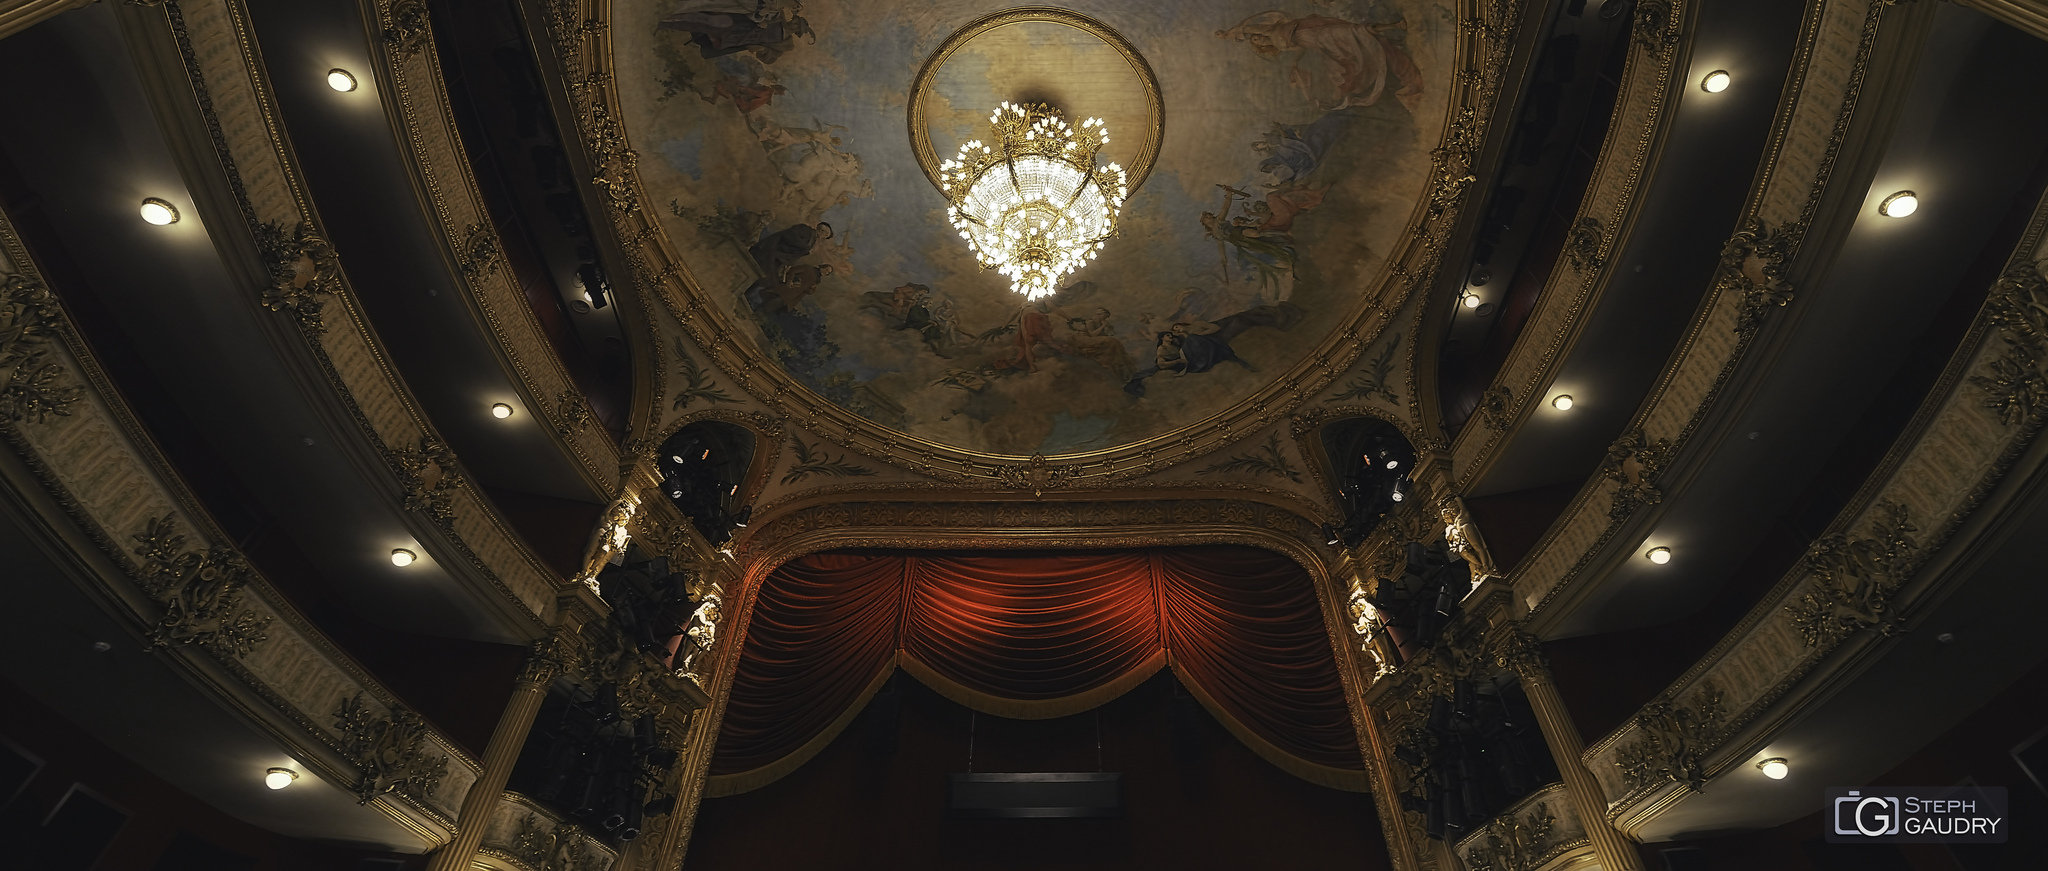 Opéra Royal de Wallonie-Liège - Le plafond